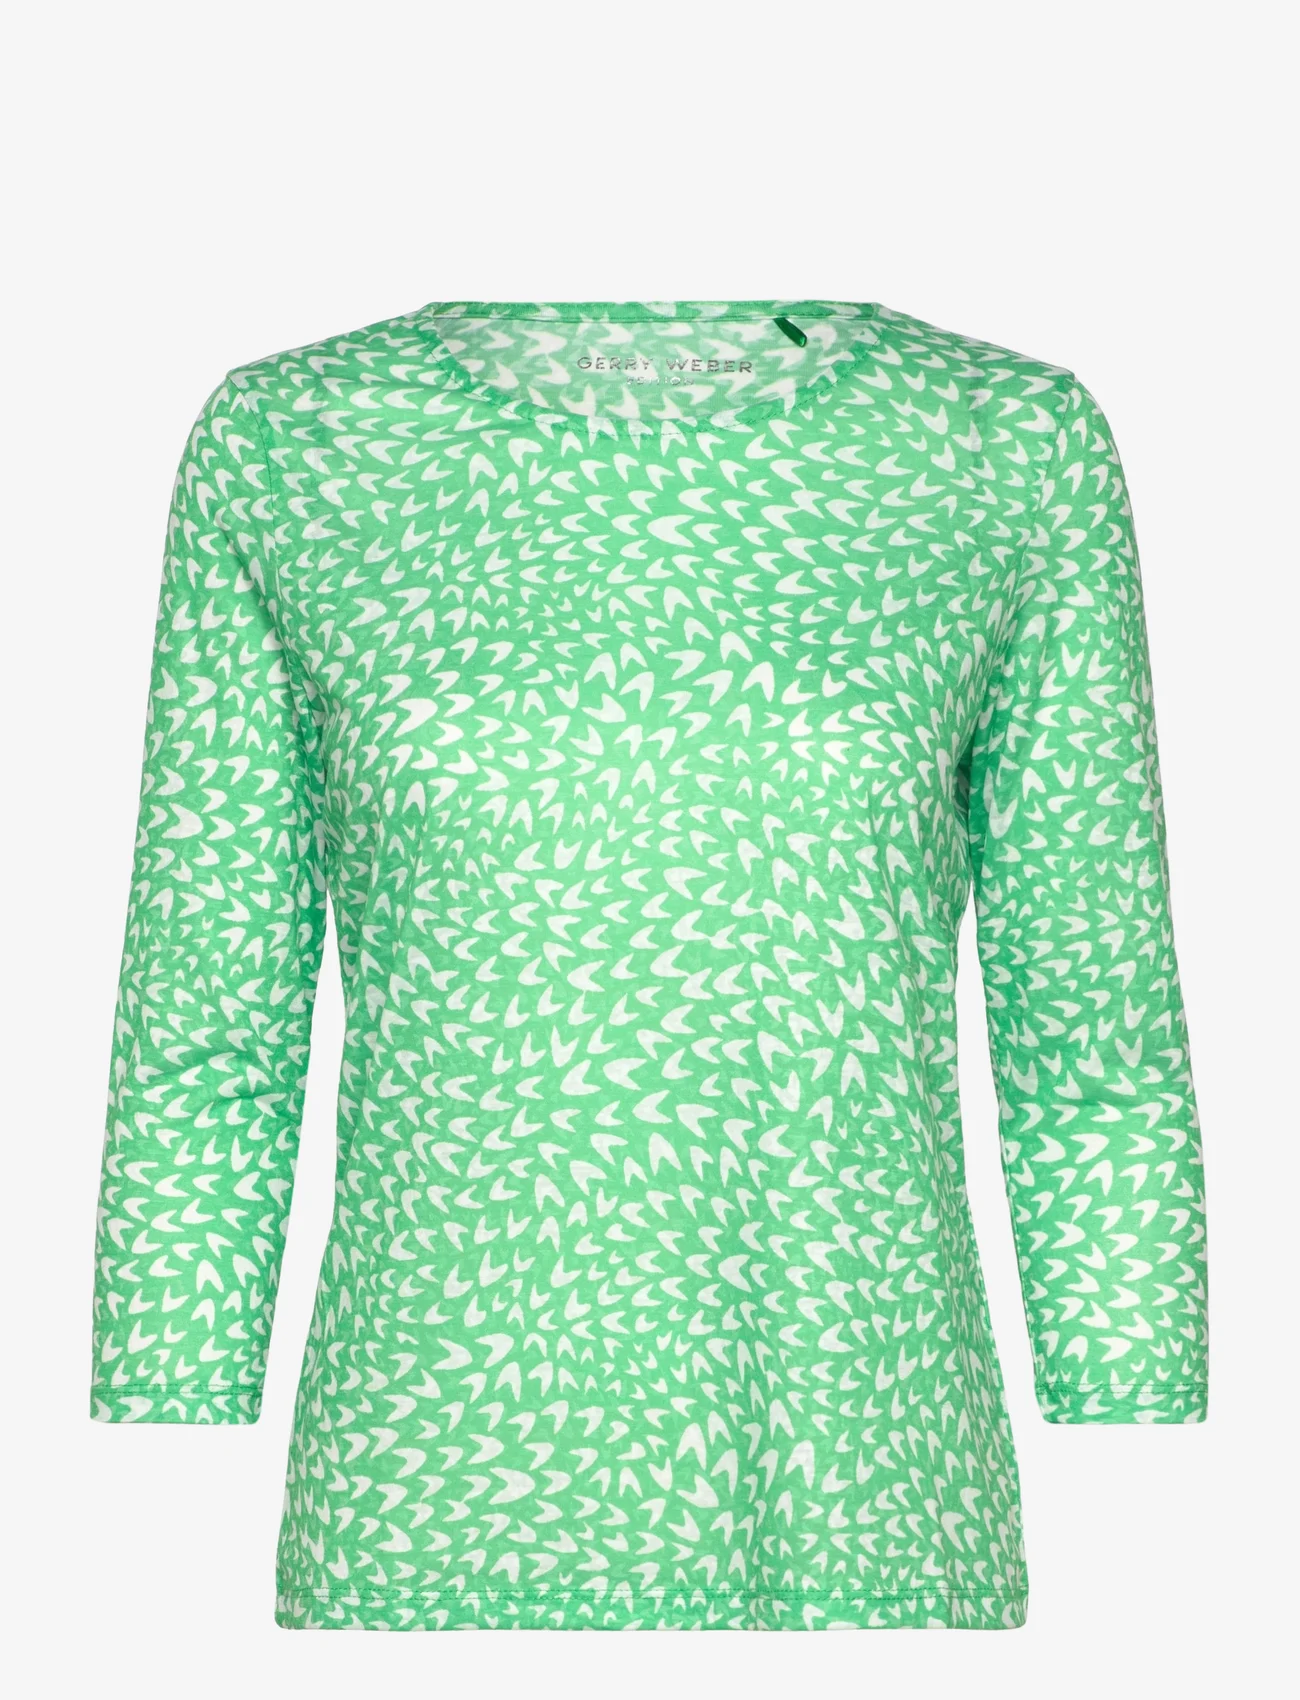 Gerry Weber Edition - T-SHIRT 3/4 SLEEVE - t-shirts met lange mouwen - green/ecru/white print - 0